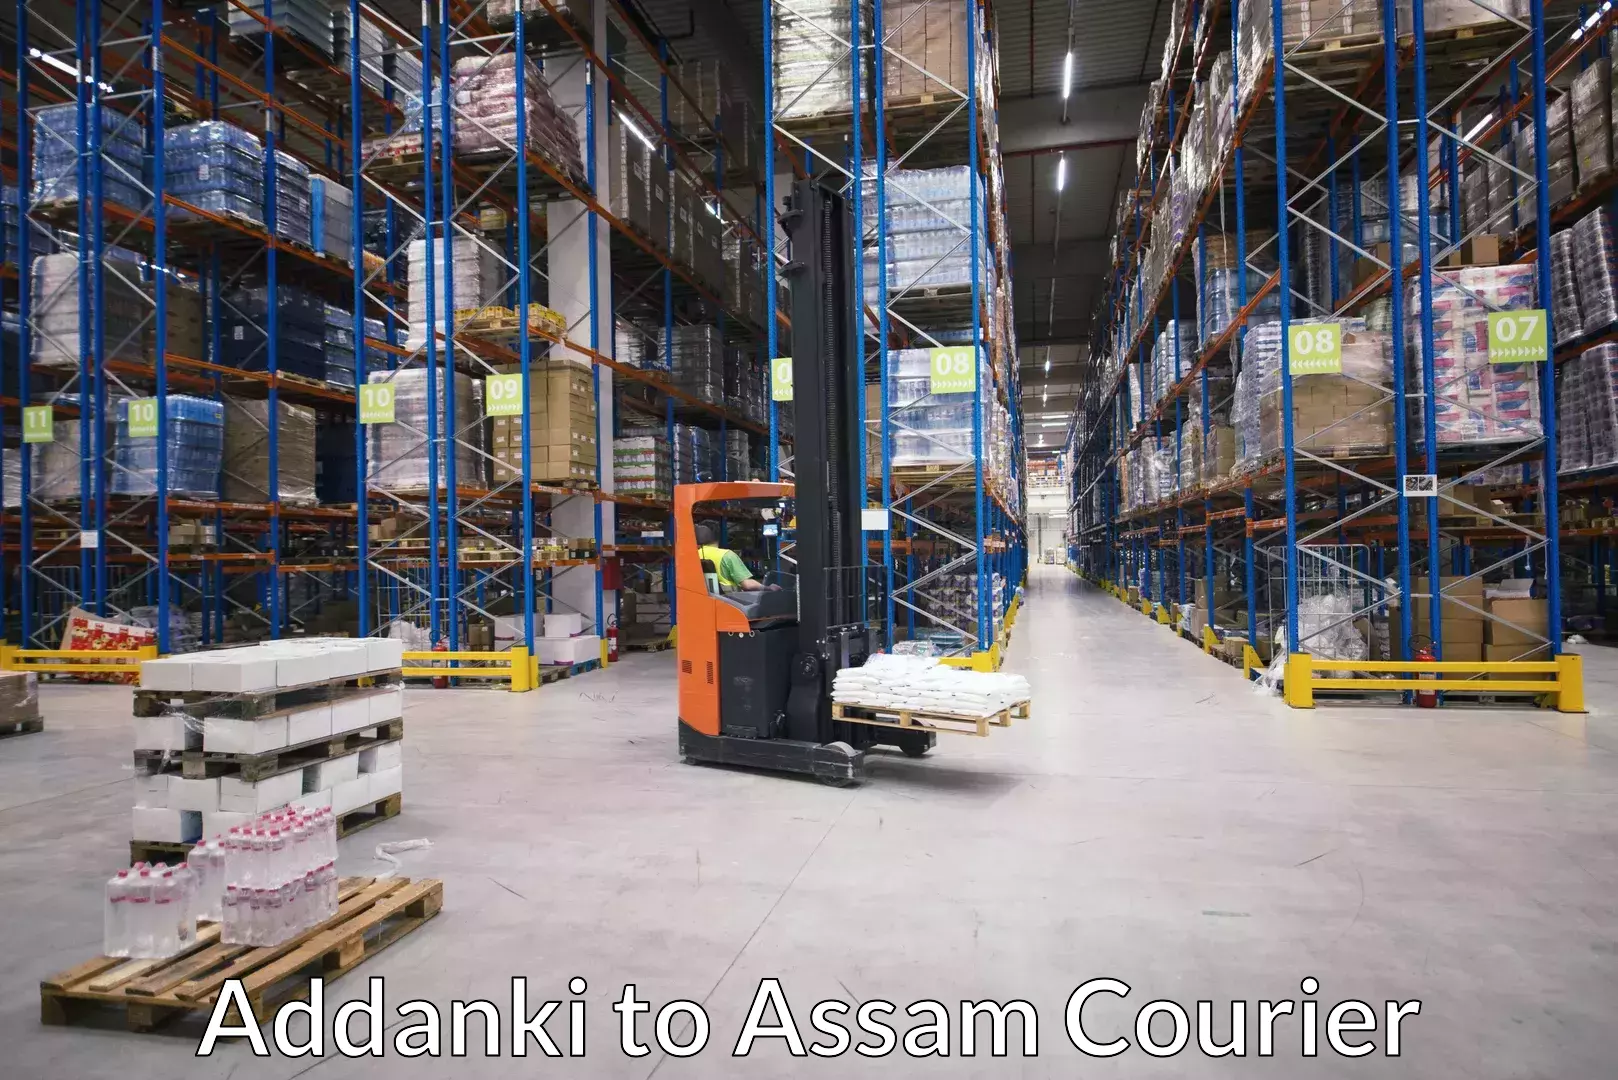 Moving and storage services in Addanki to Darranga Mela